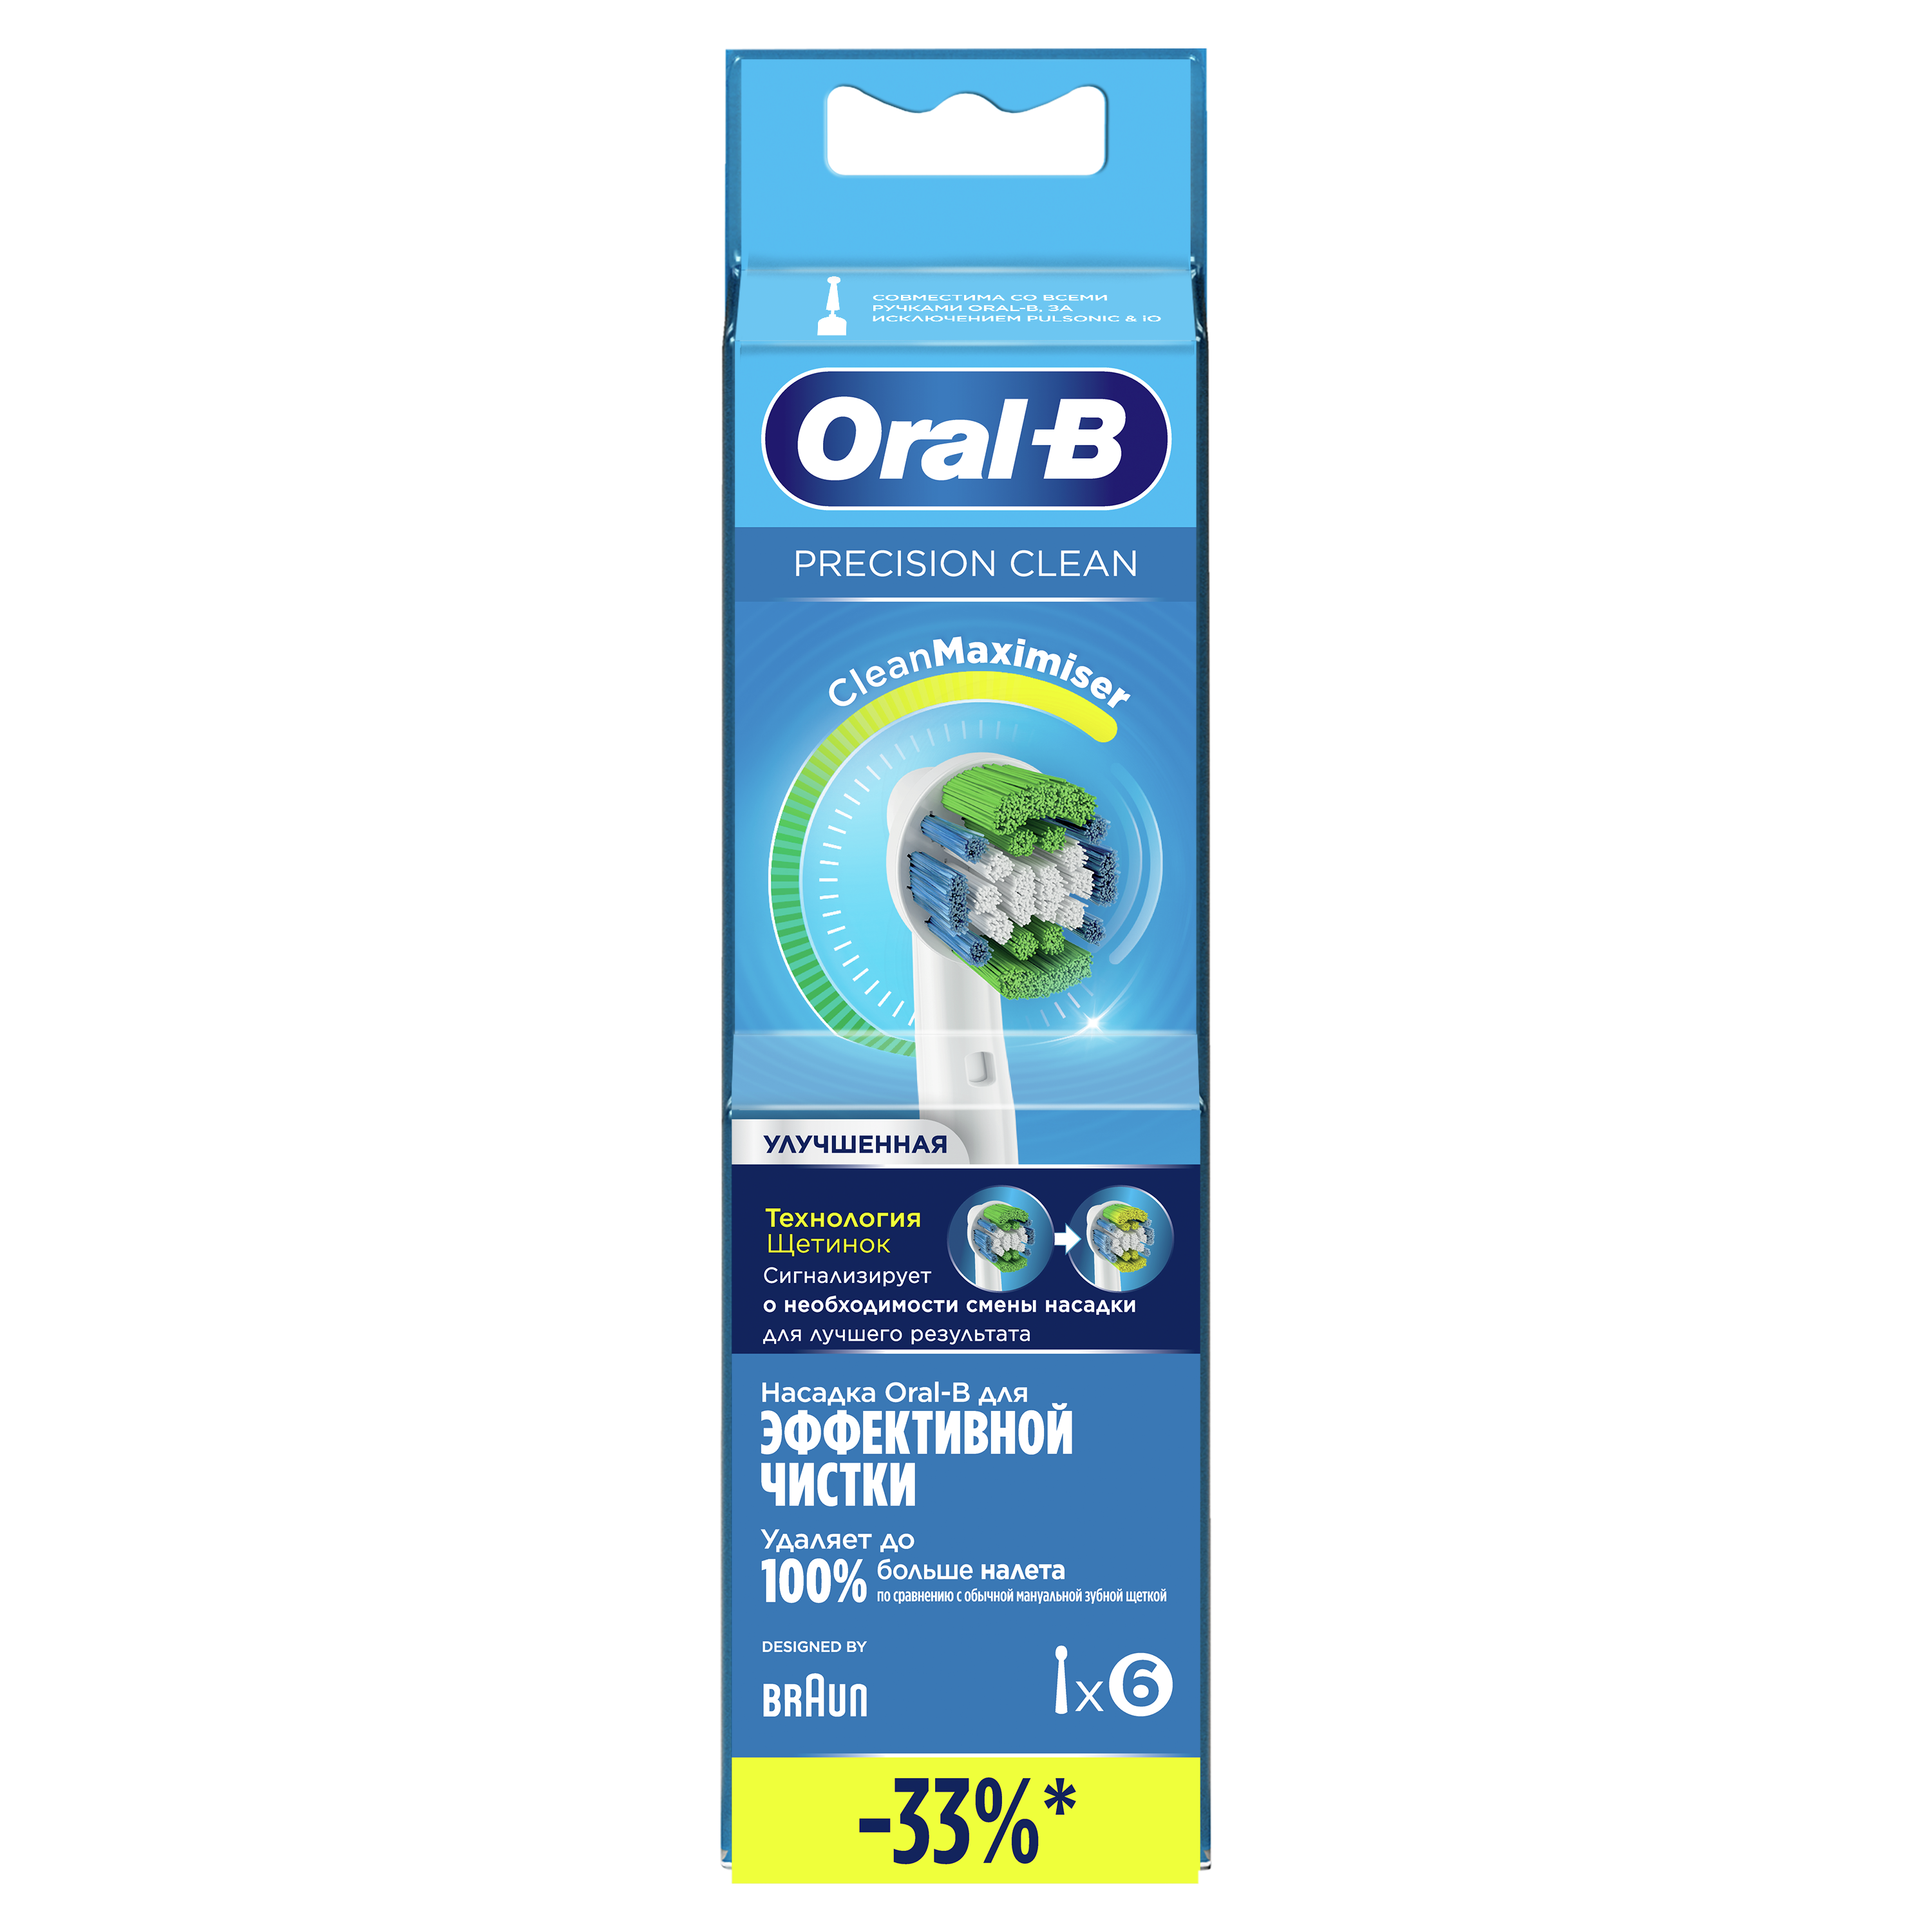 Насадки для зубной щетки ORAL-B EB20RB Precision Clean 6 шт насадки для зубной щётки oral b cleanmaximiser crossaction eb50rb 6 шт